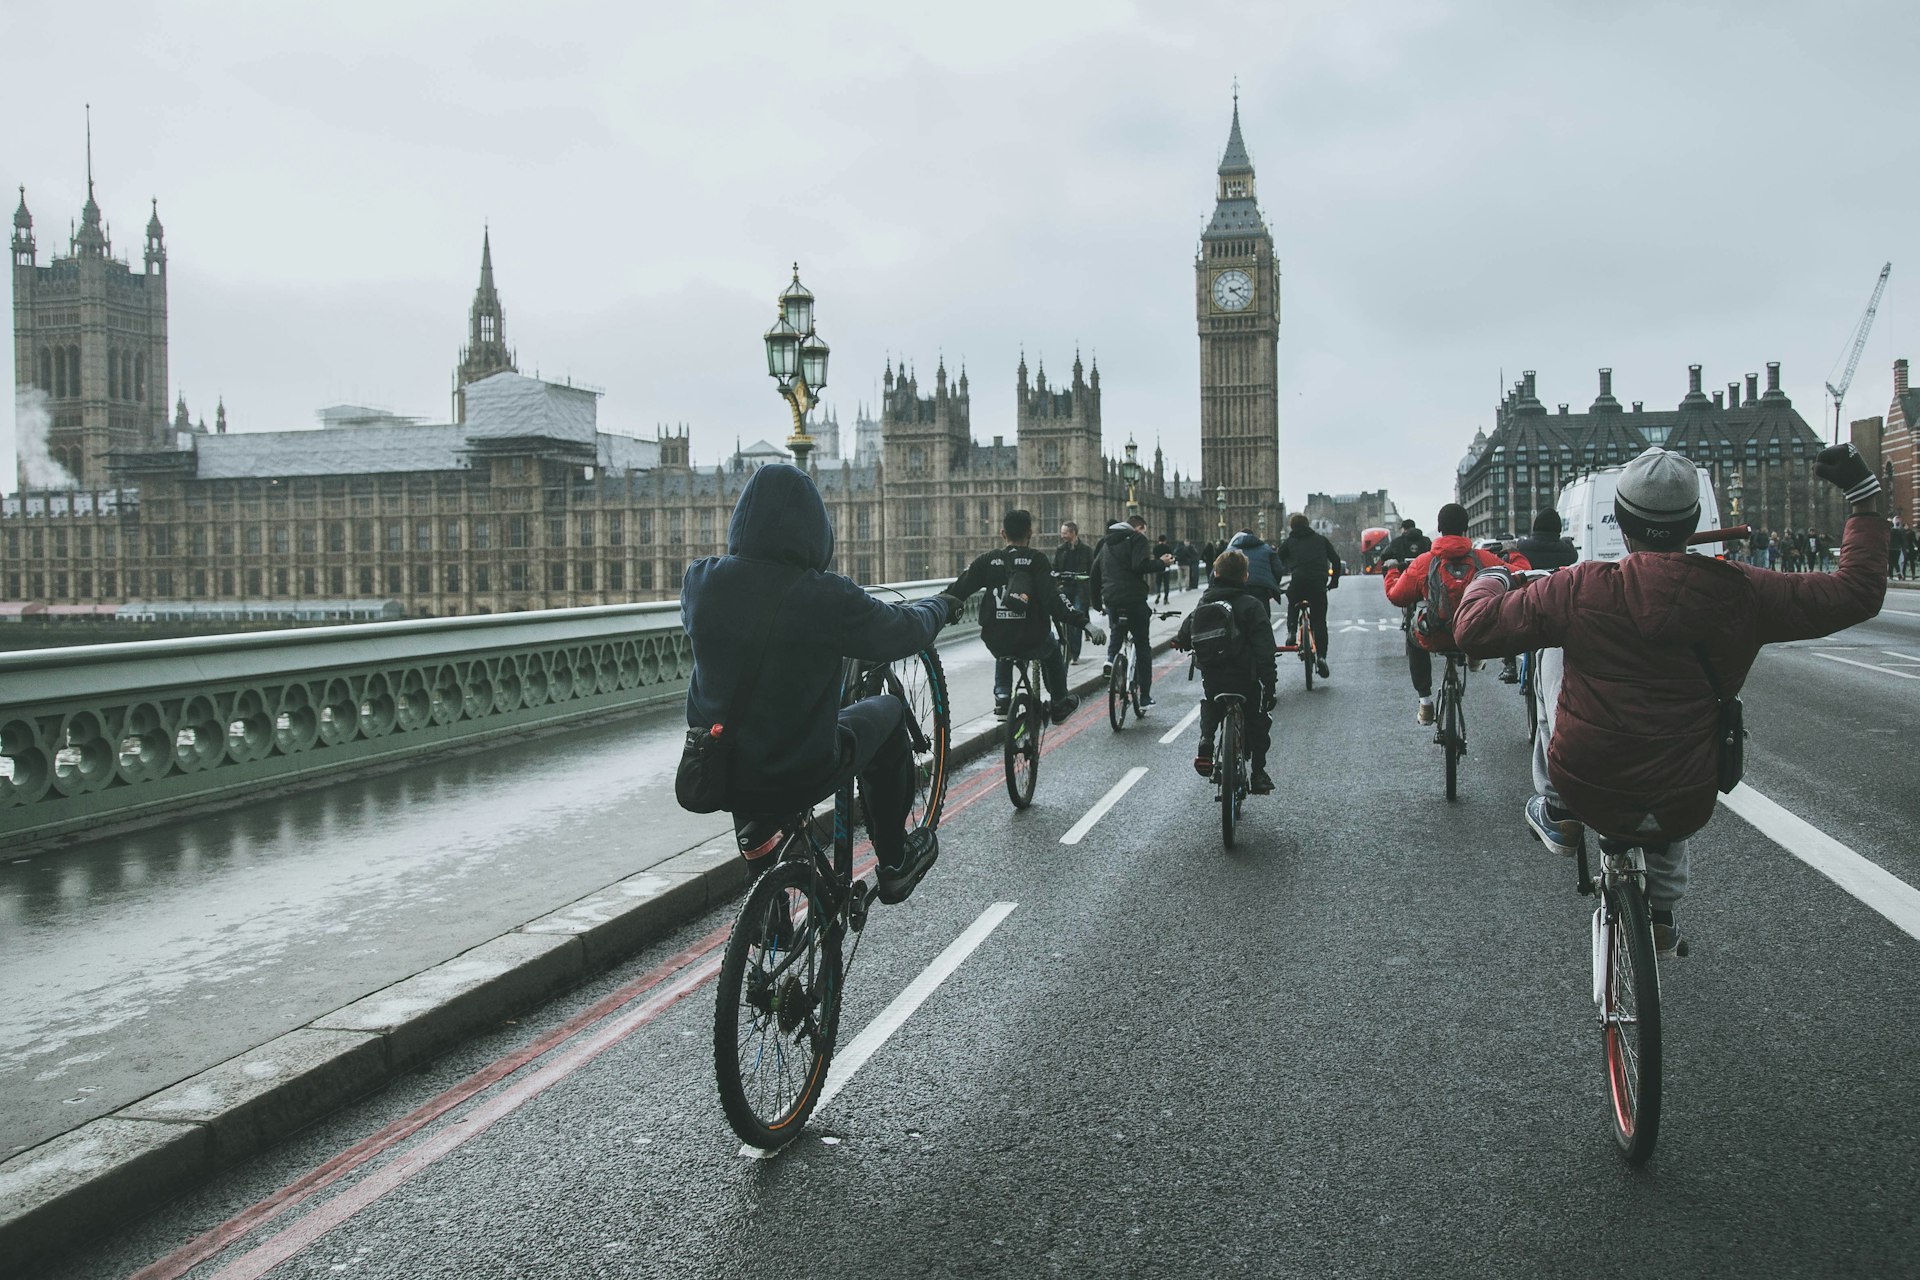 London's bridges are symbols of freedom, not fear